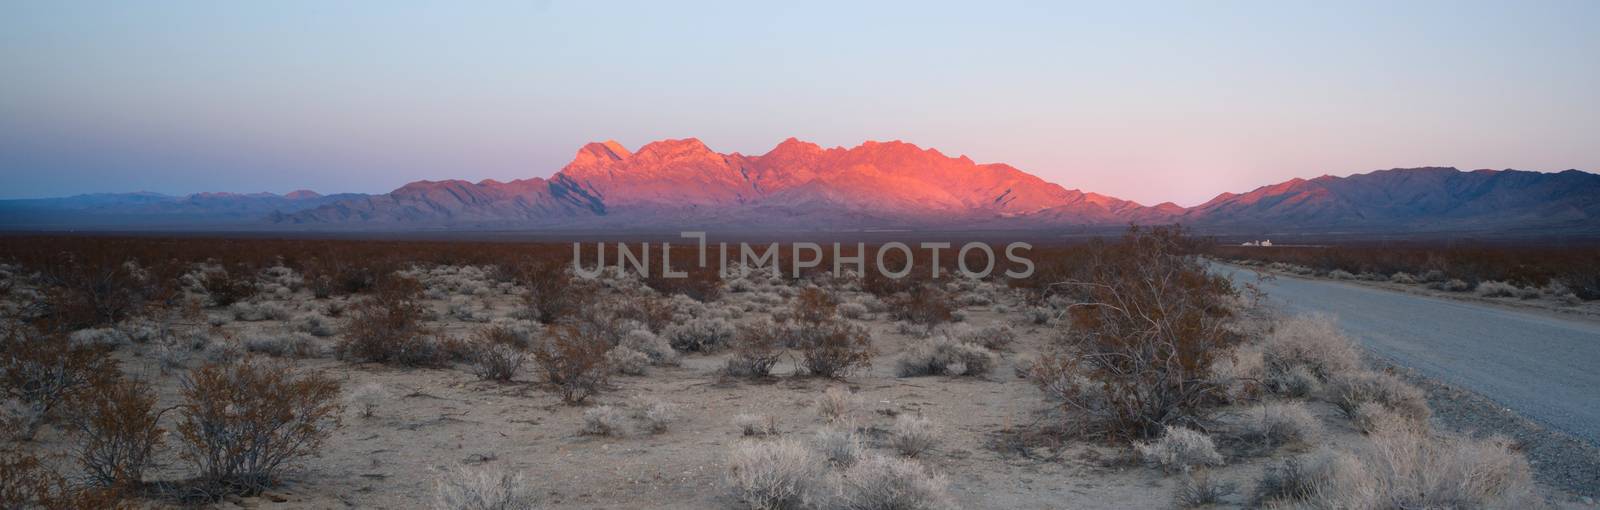 Providence Mountains Fountain Peak Mojave Desert Landscape by ChrisBoswell